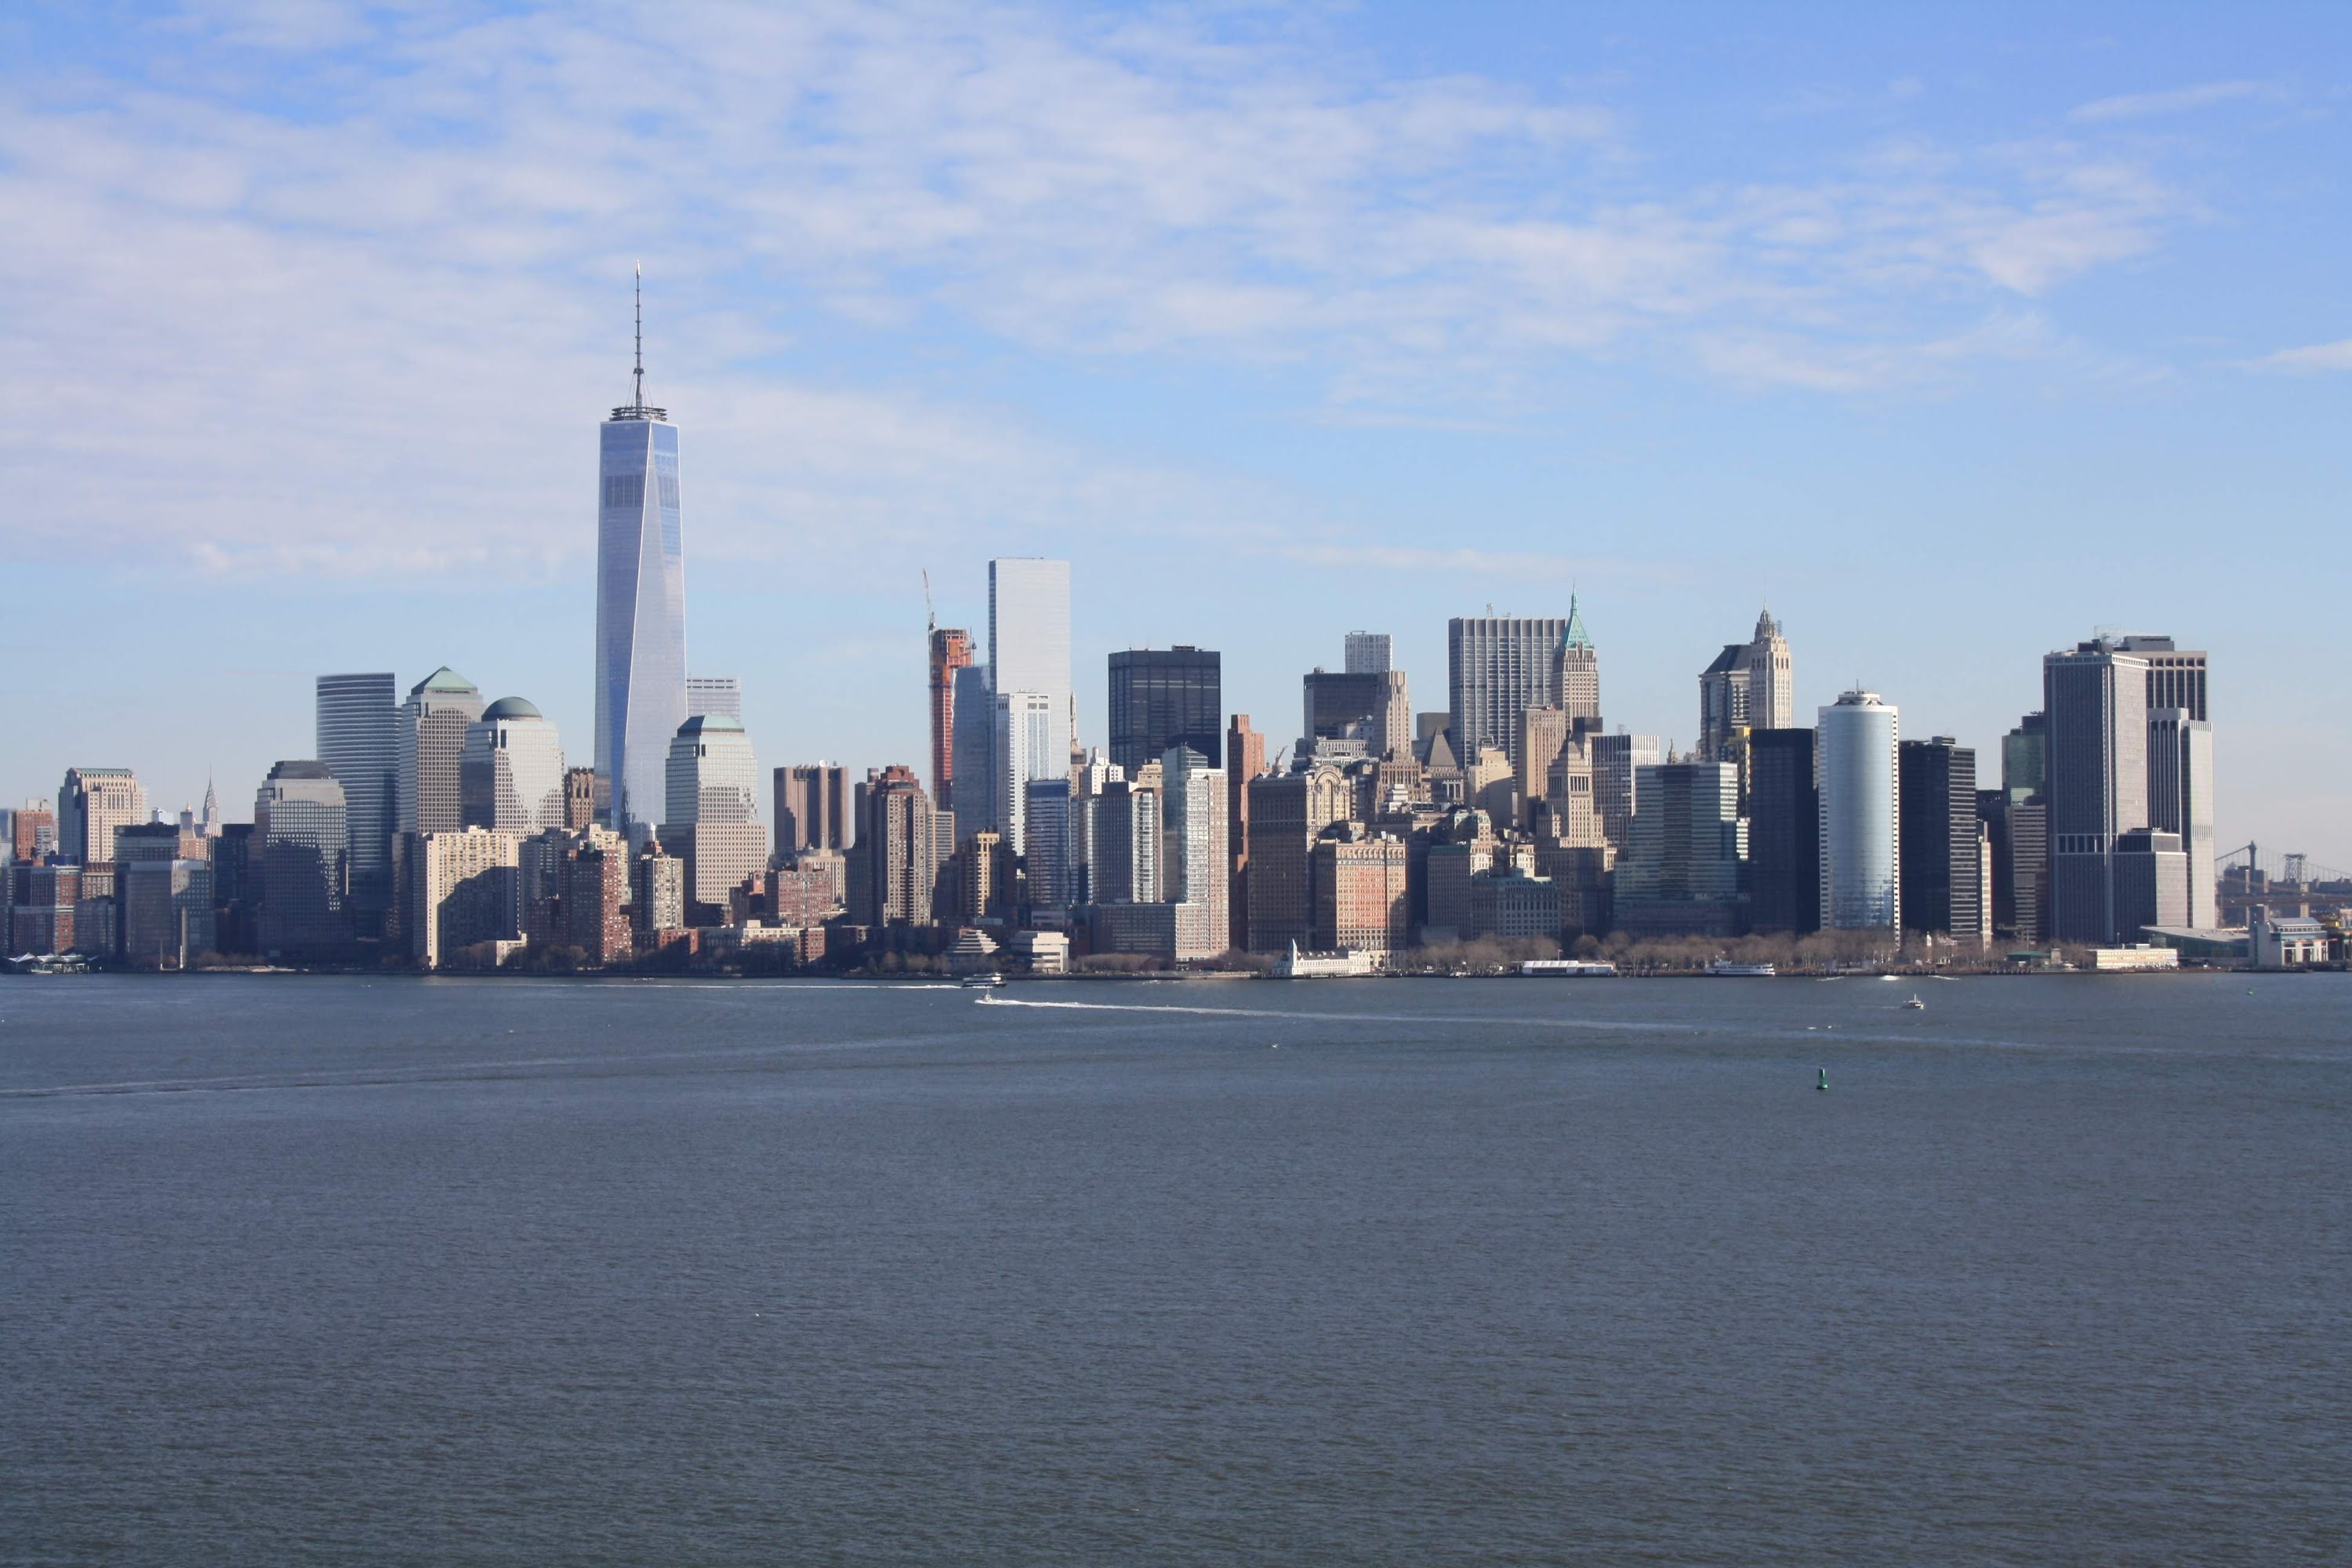 New York January 2015 - Lower Manhattan Skyline - YouTube